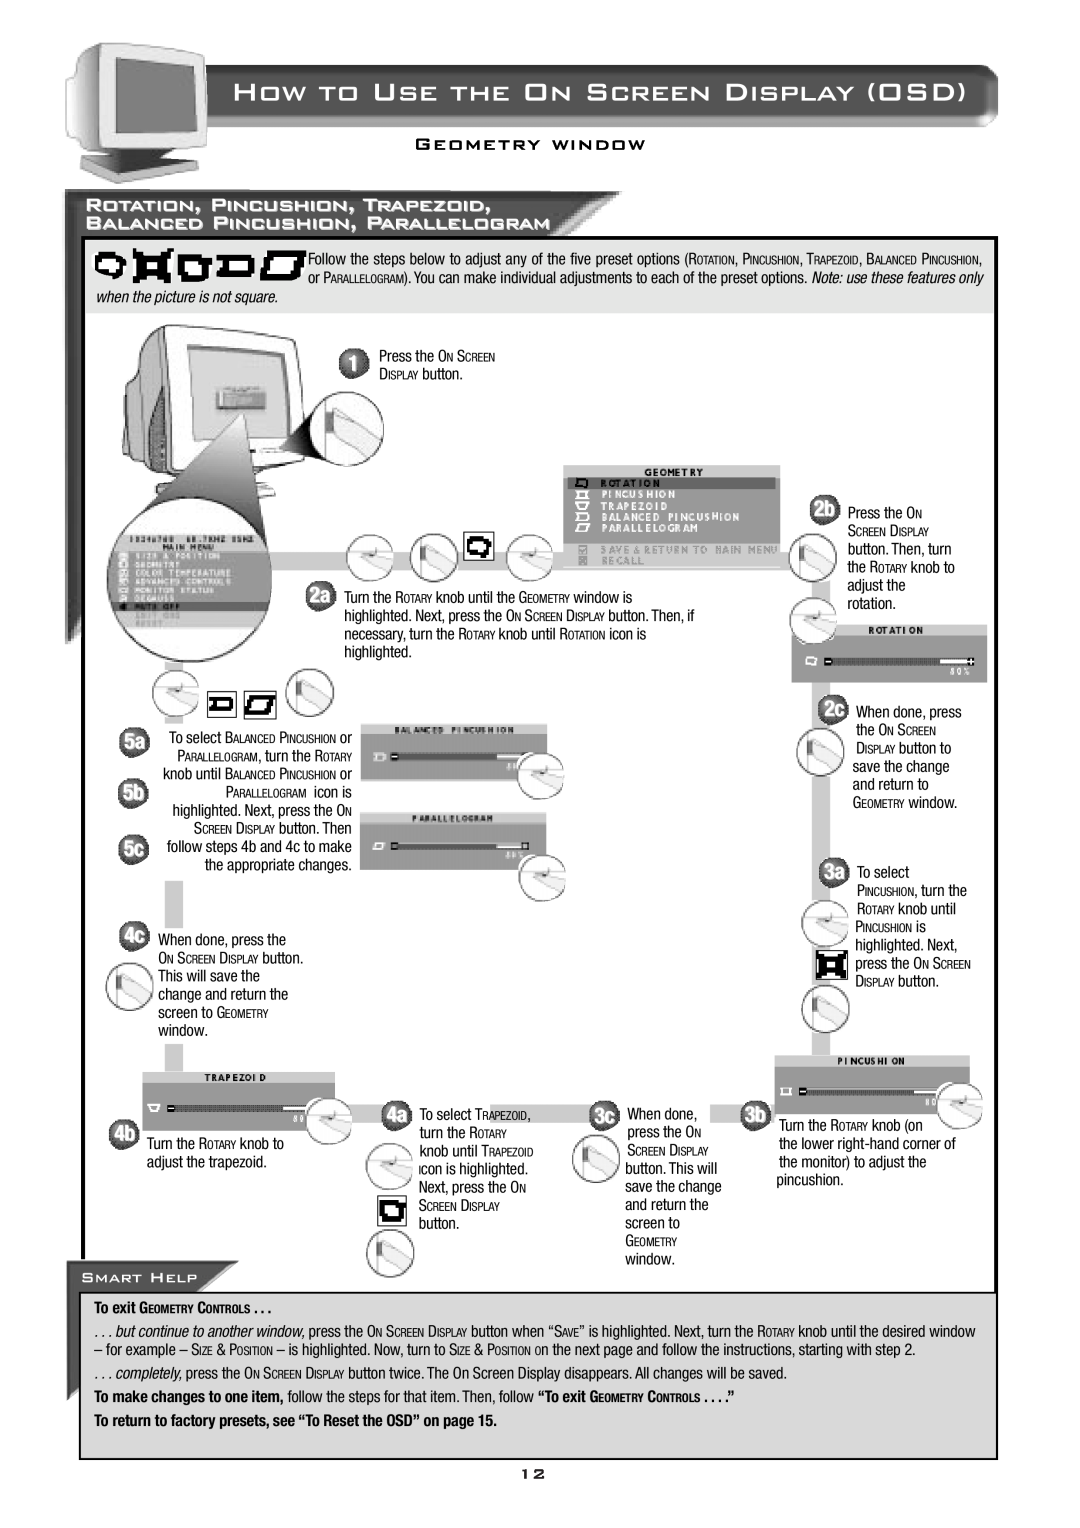 Philips 17B2302Q Rotation, Pincushion, Trapezoid Balanced Pincushion, Parallelogram, How to Use the On Screen Display OSD 